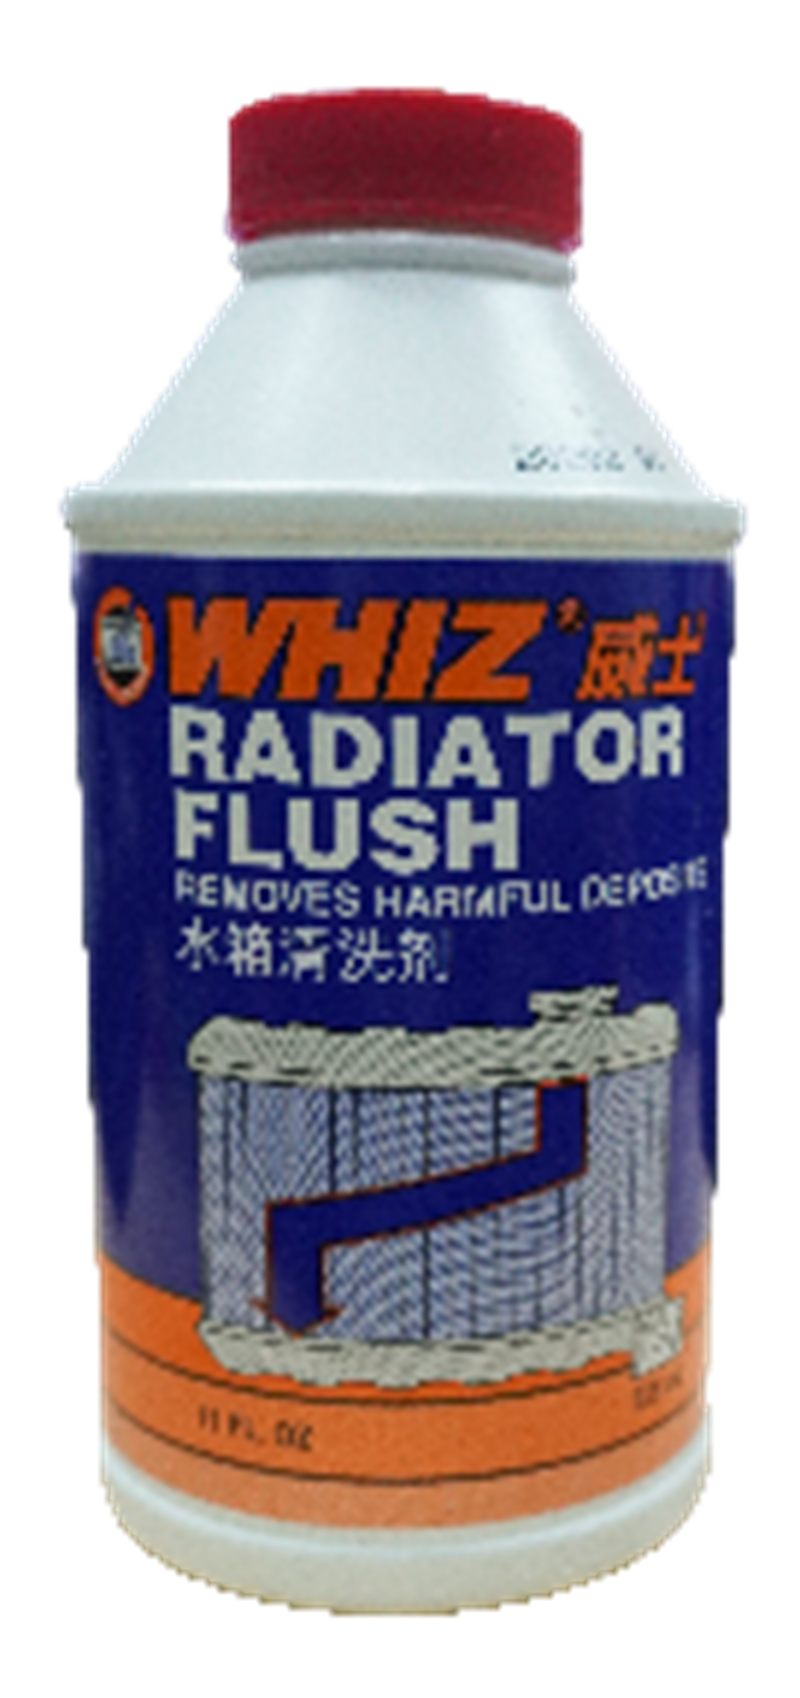 Whiz Radiator Flush